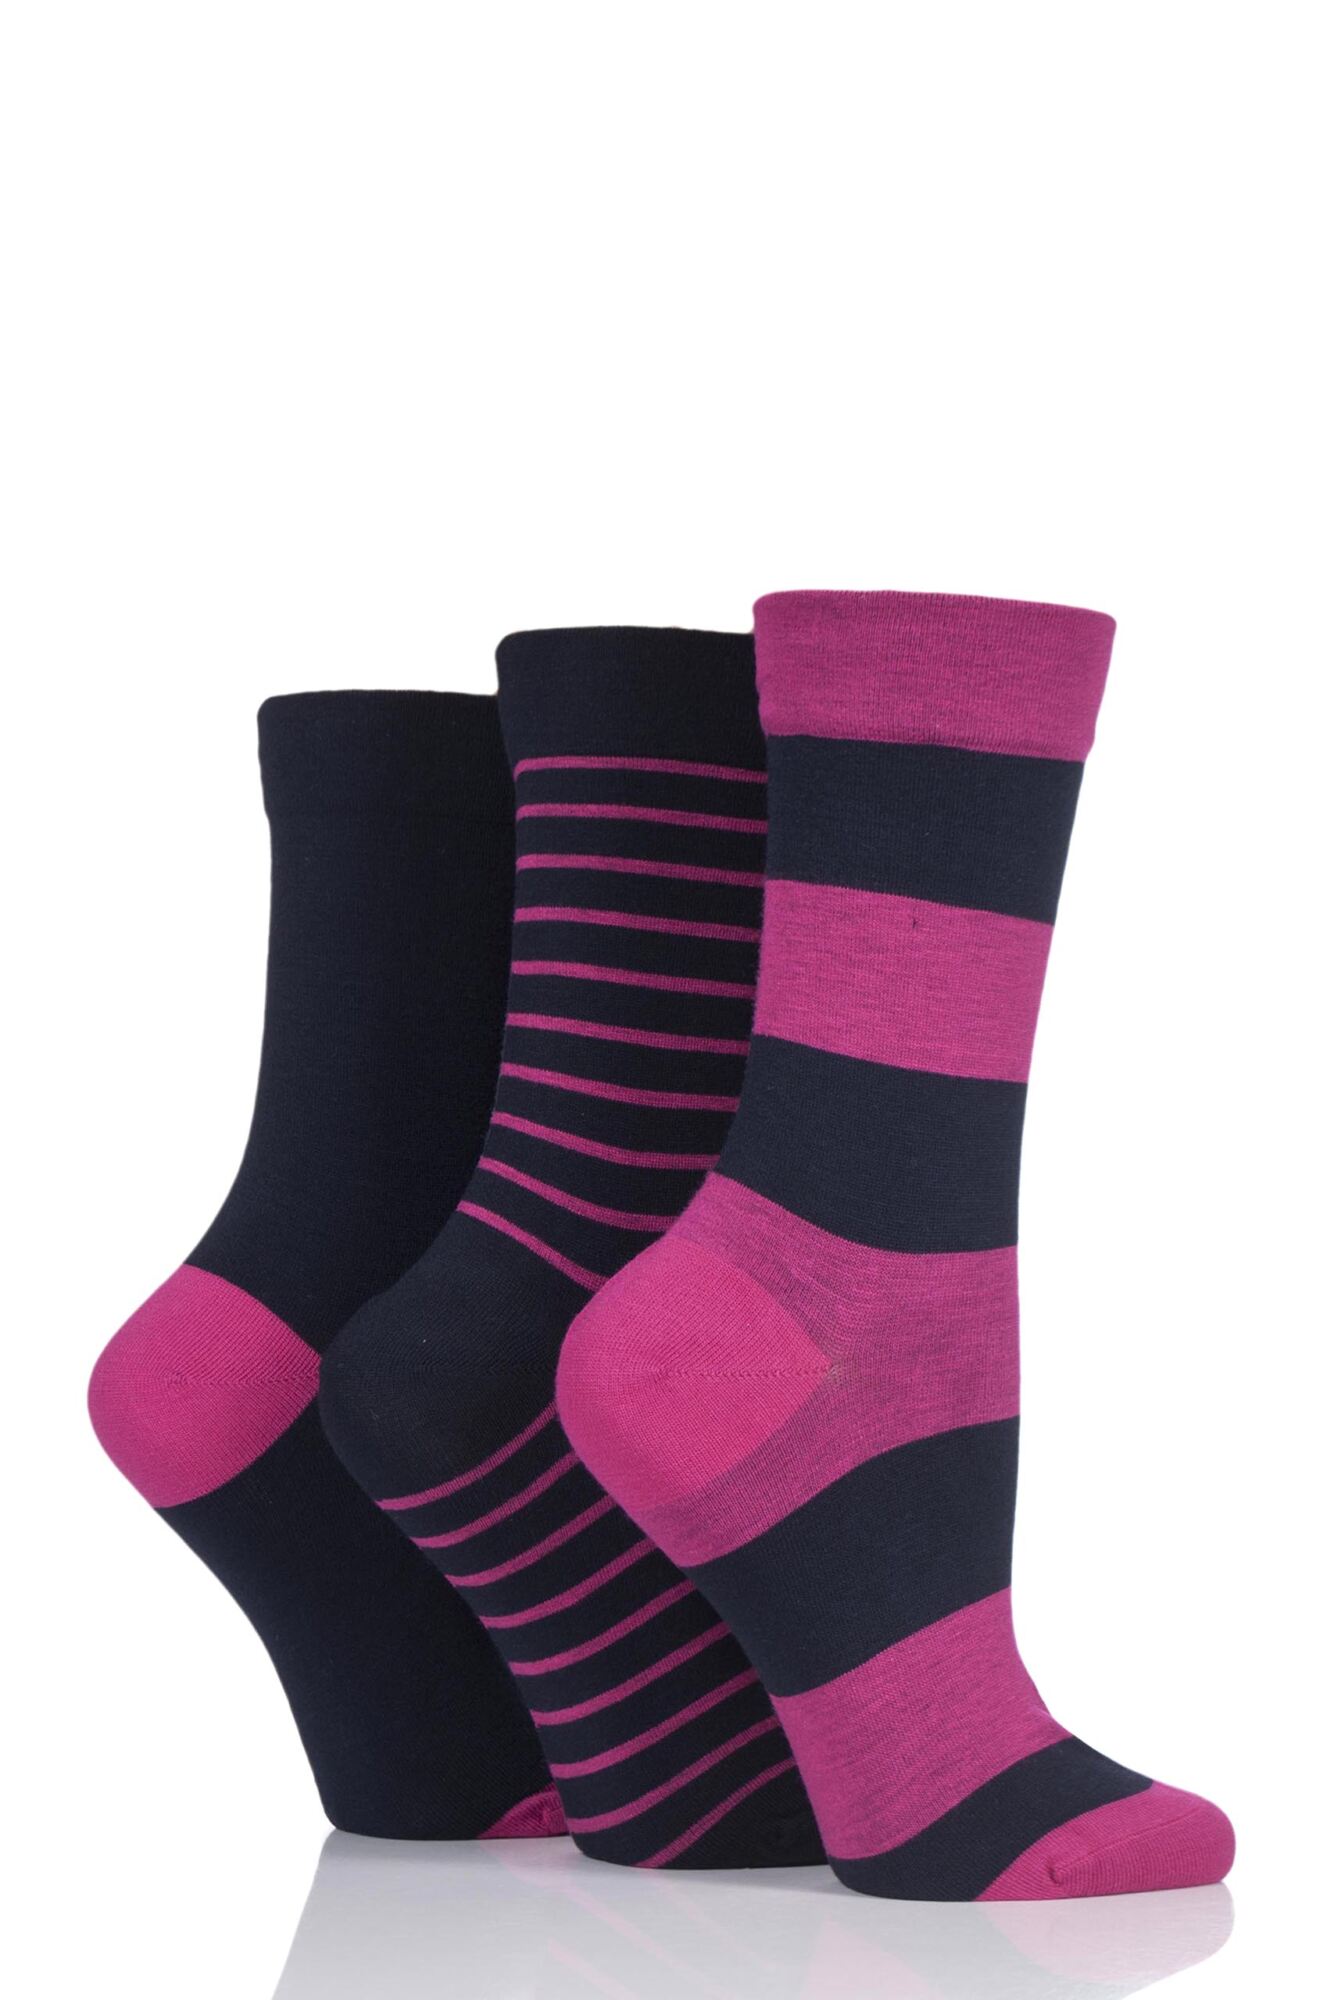 3 Pair Gentle Bamboo Socks With Smooth Toe Seams In Plains And Stripes Ladies - Sockshop